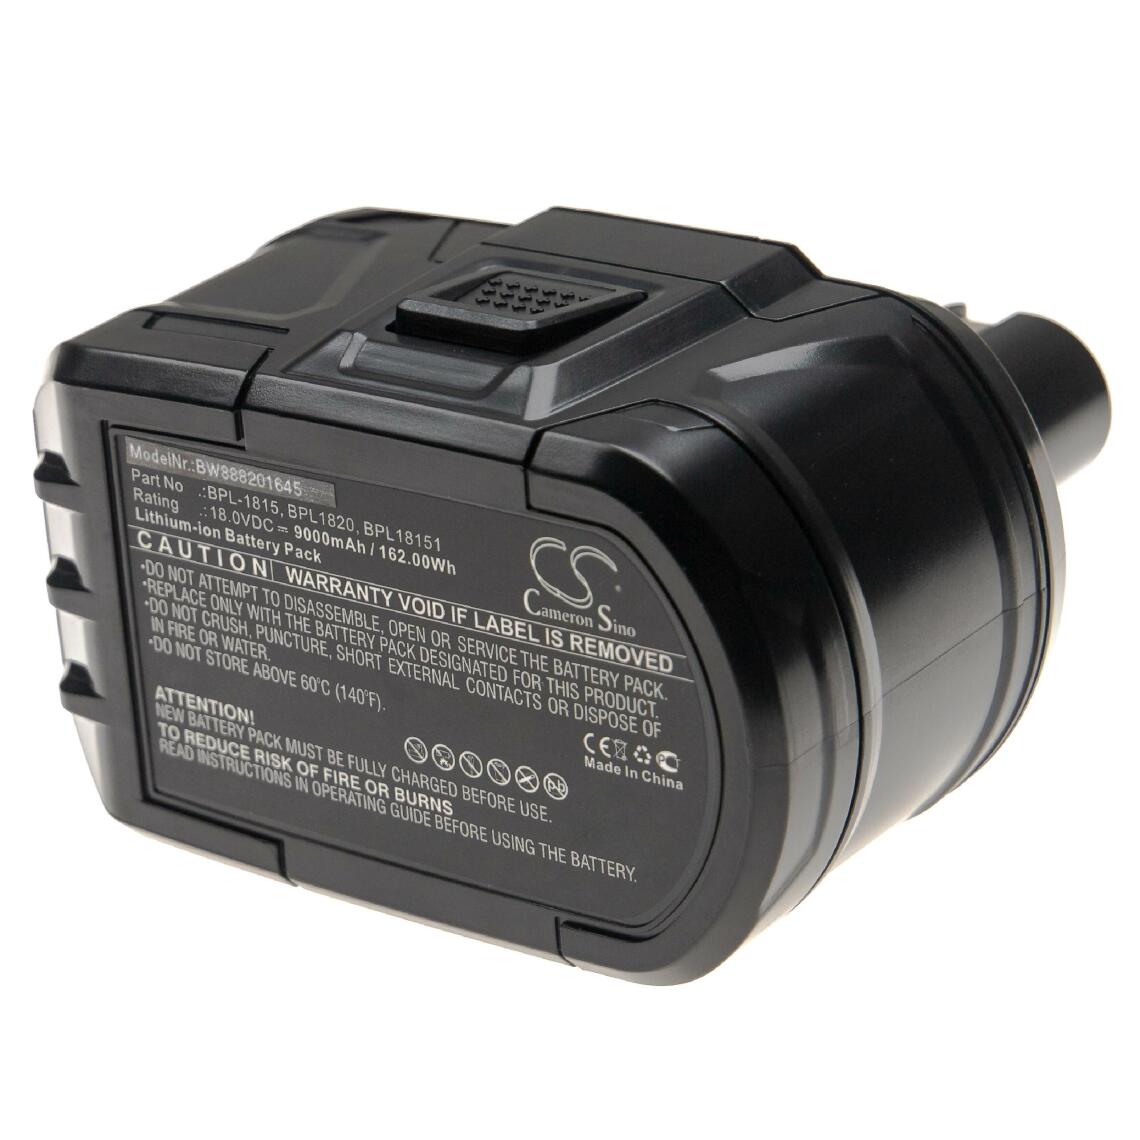 Vhbw - vhbw Batterie compatible avec Ryobi P221, P230, P240, P2400, P241, P246, P250, P2500, P2600, P300, P301 outil électrique (9000mAh Li-Ion 18V) - Clouterie